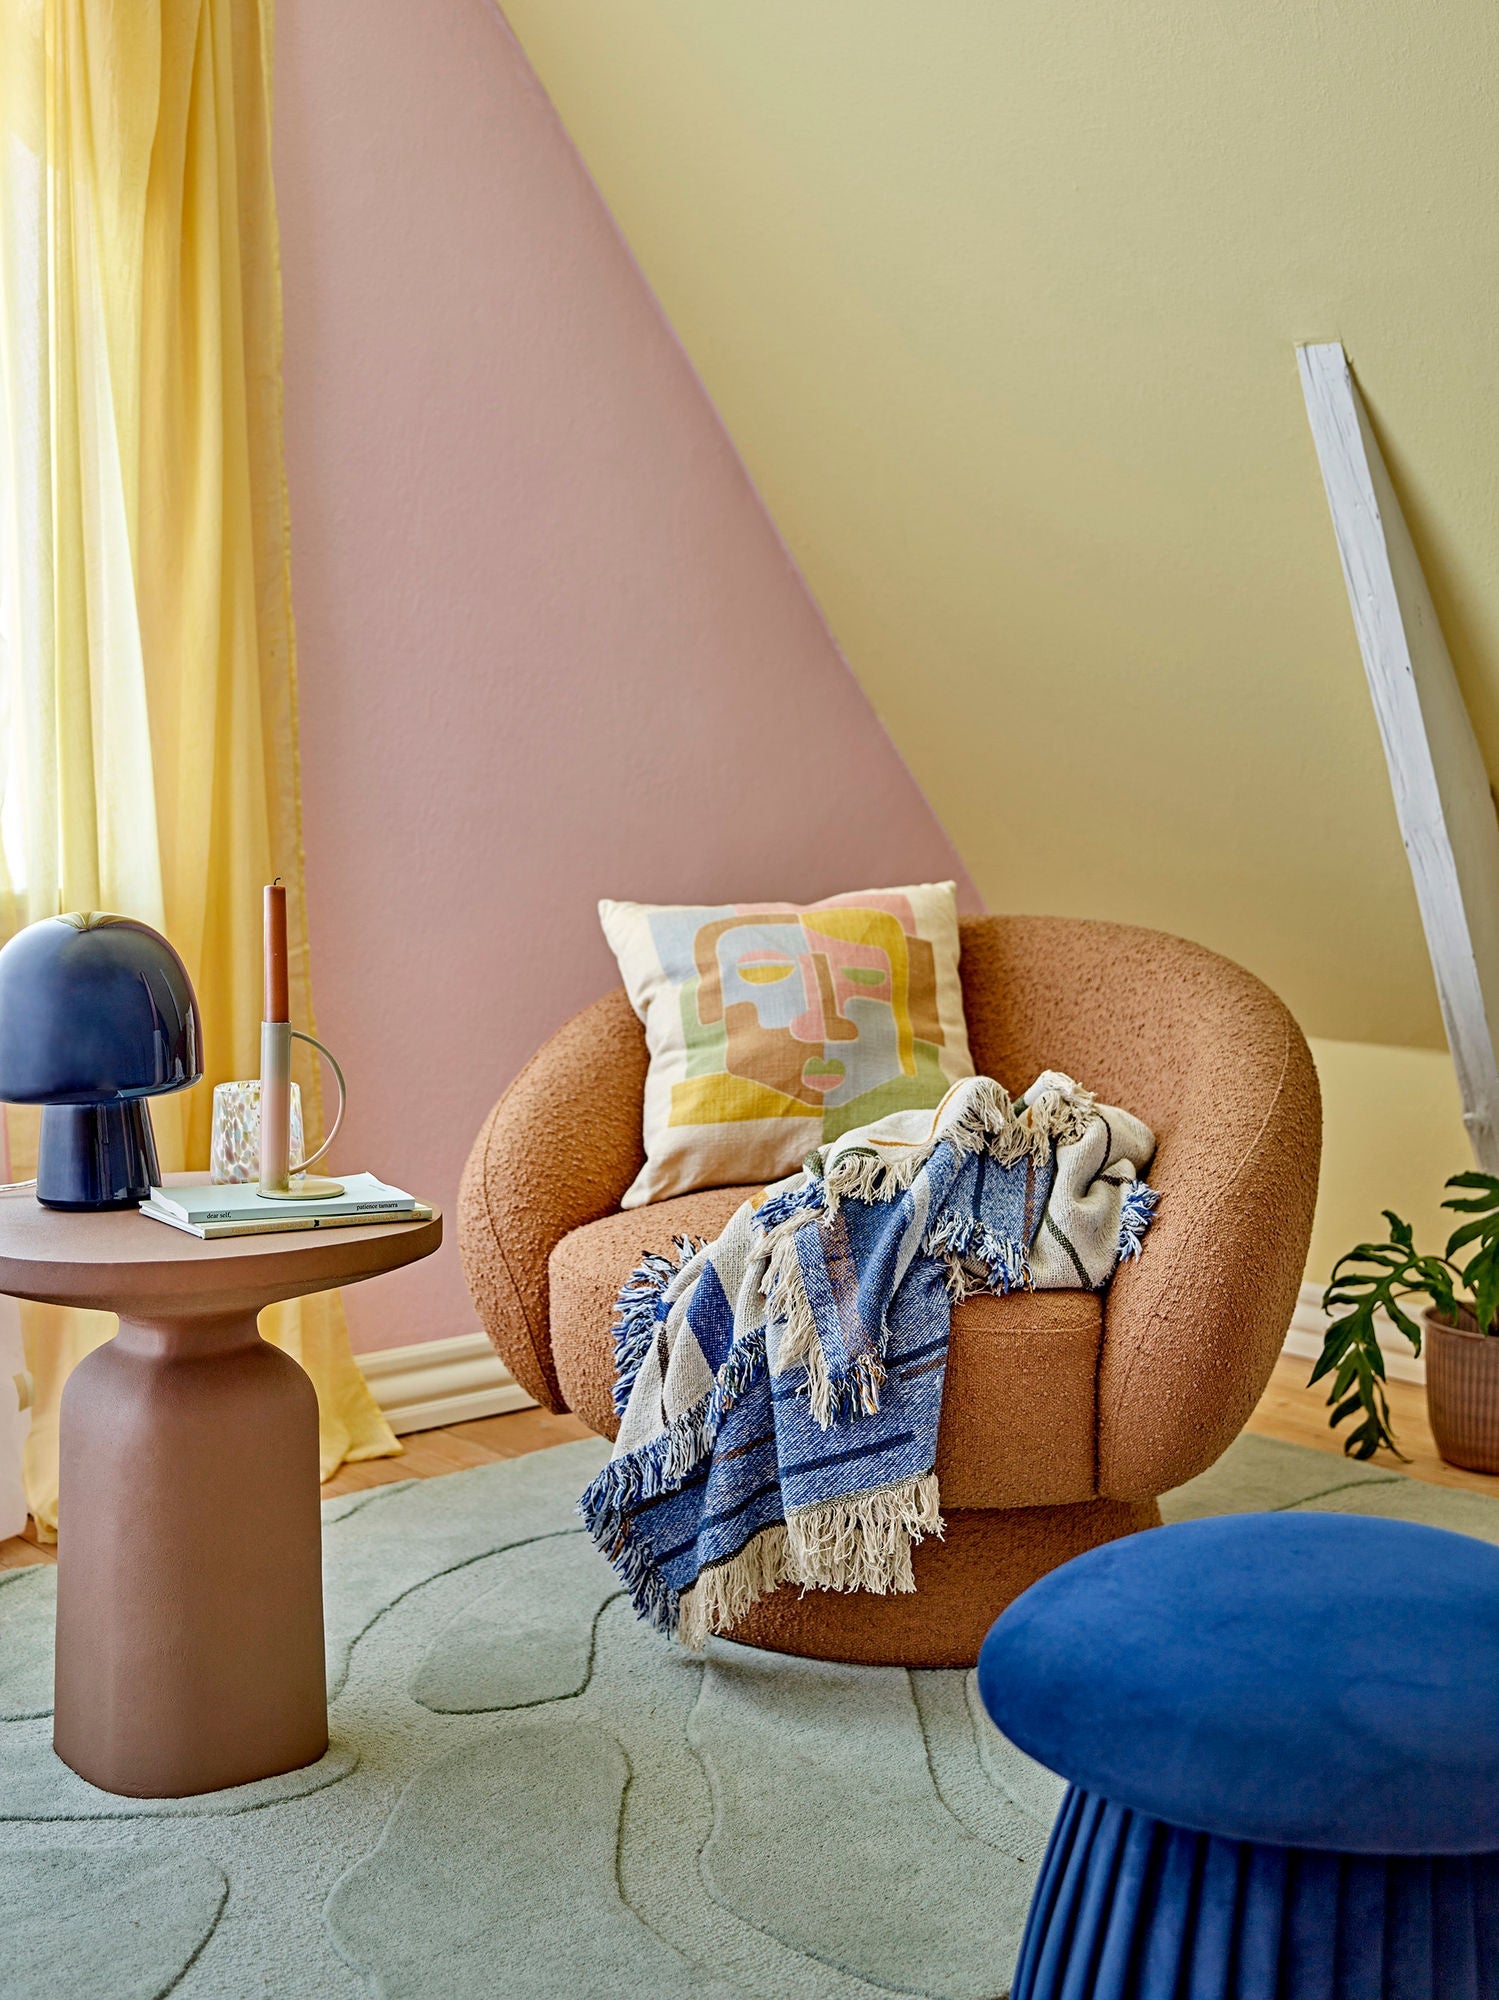 Bloomingville Ted Lounge -tuoli, ruskea, polyesteri